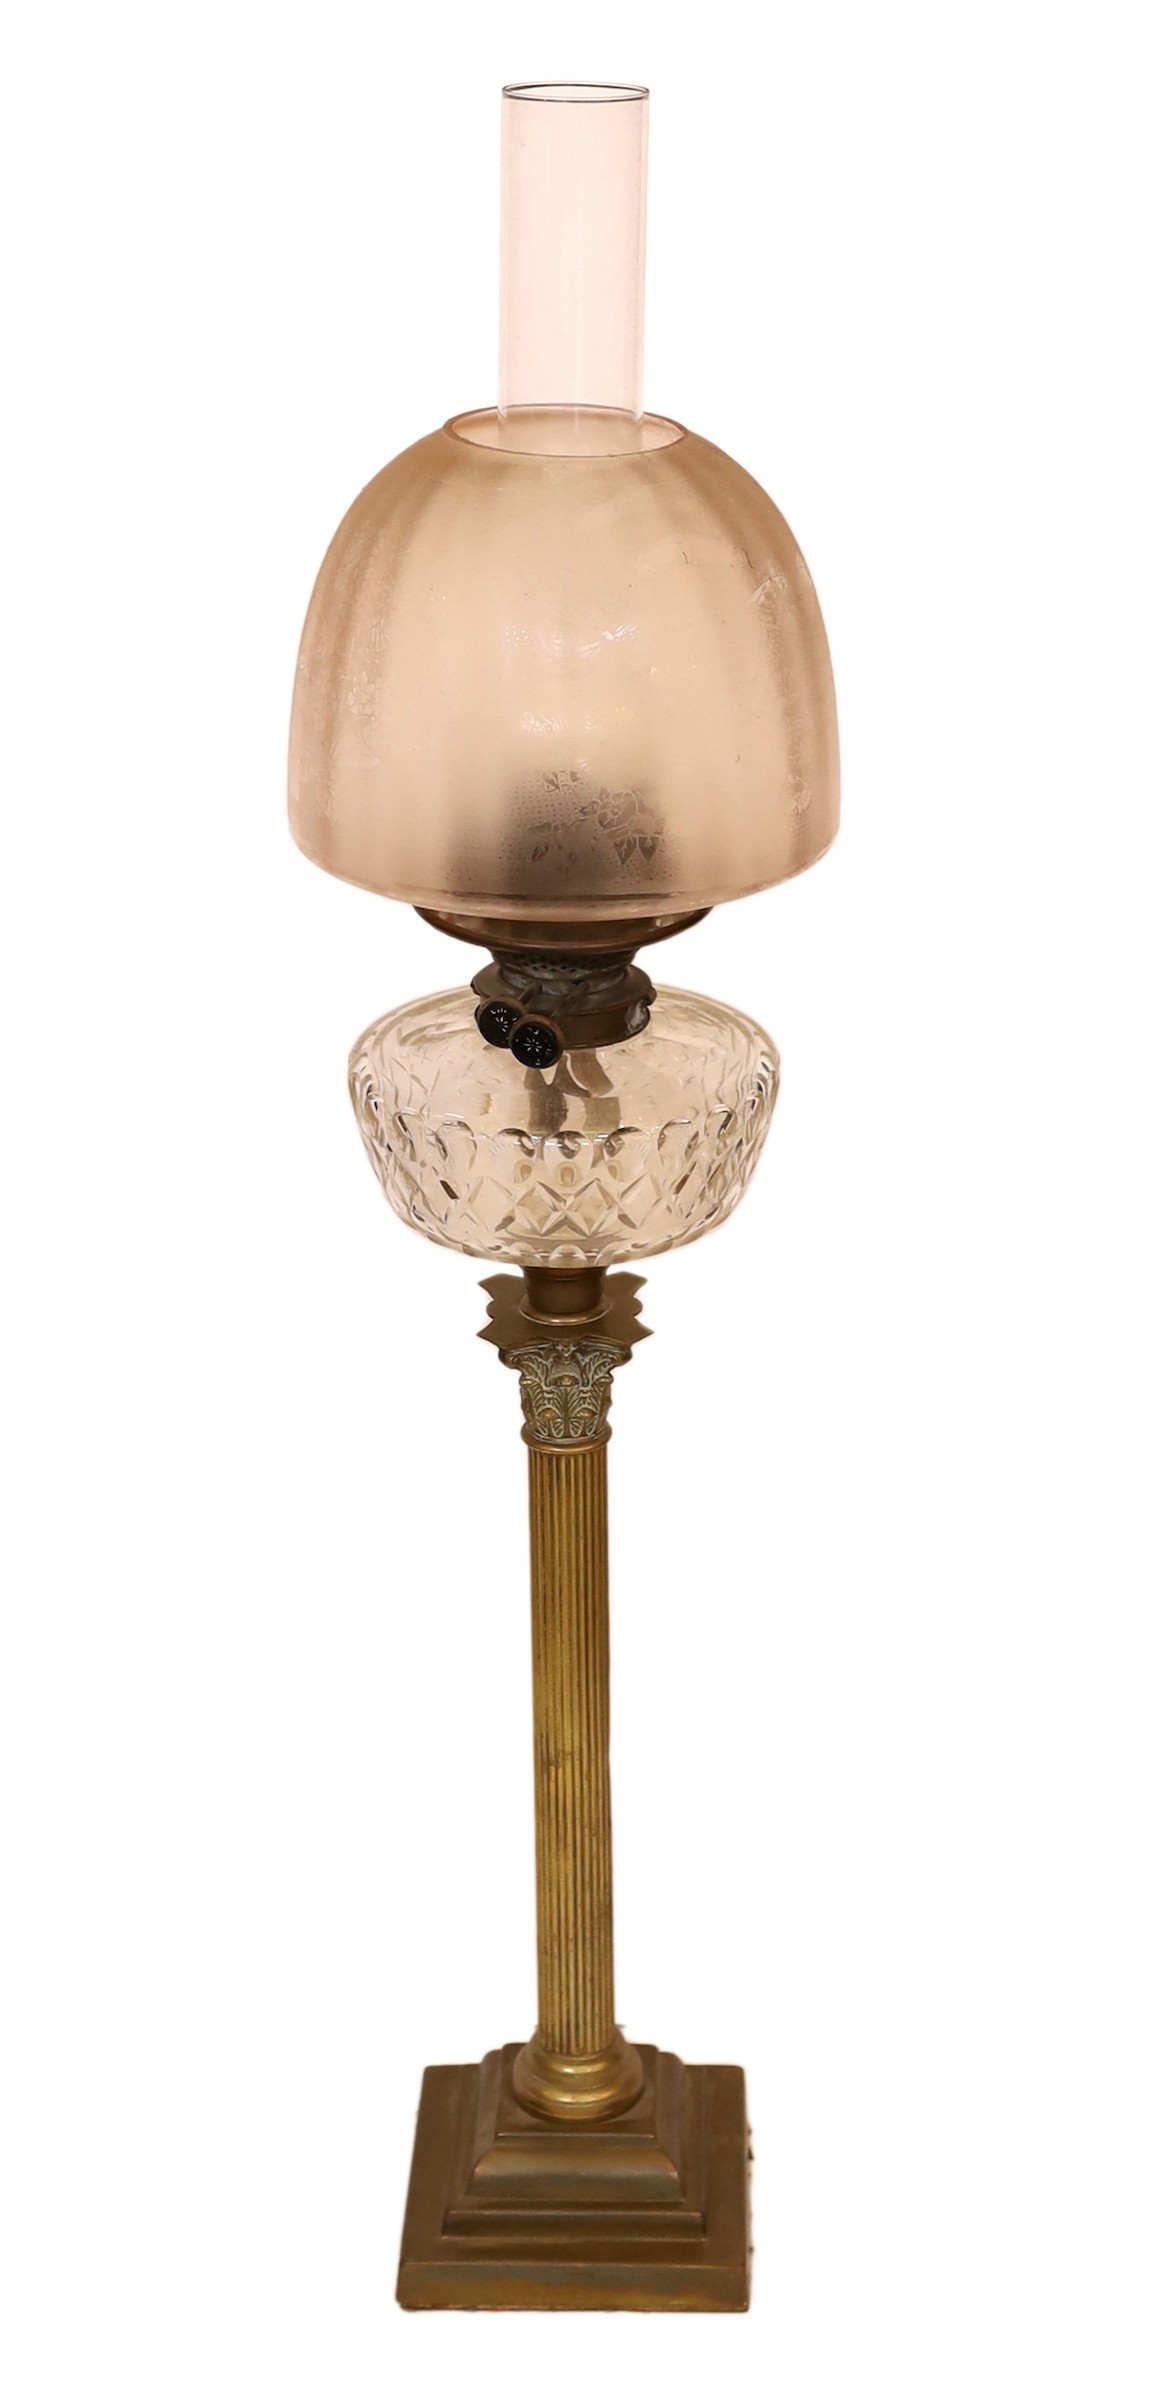 An Edwardian brass Corinthian column oil lamp with cut glass reservoir, improved duplex mechanism, etched globe and flue, height overall 85cm